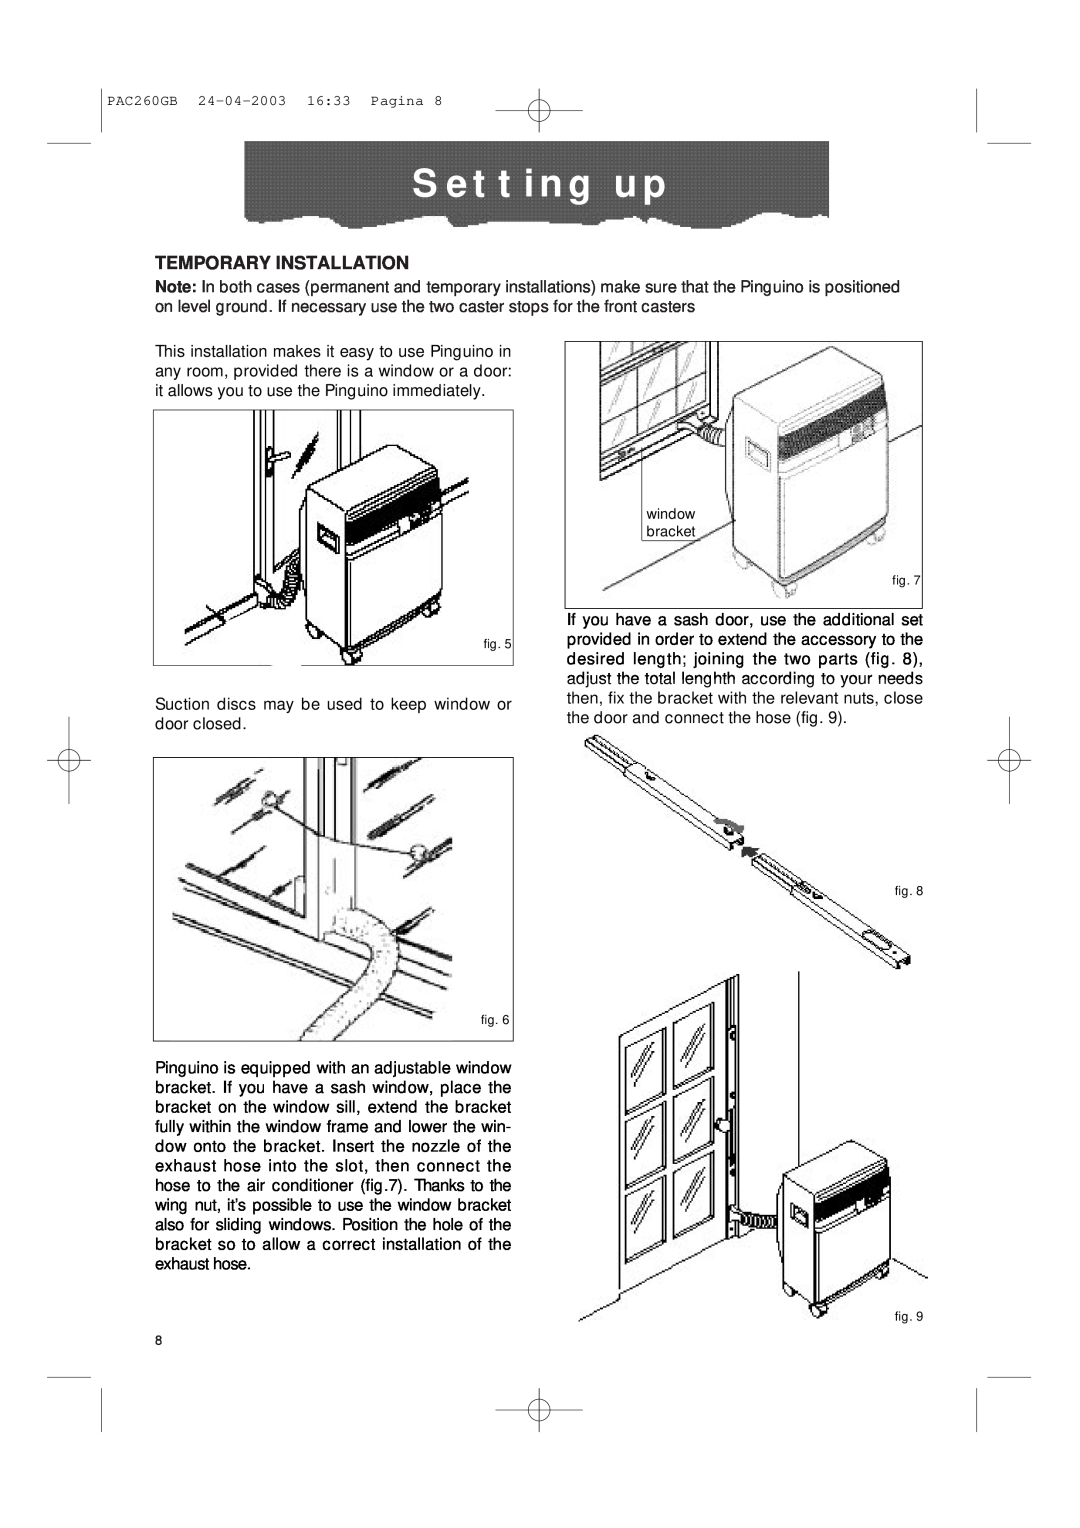 DeLonghi PAC260 manual S e t t i n g u p, Temporary Installation, window bracket 